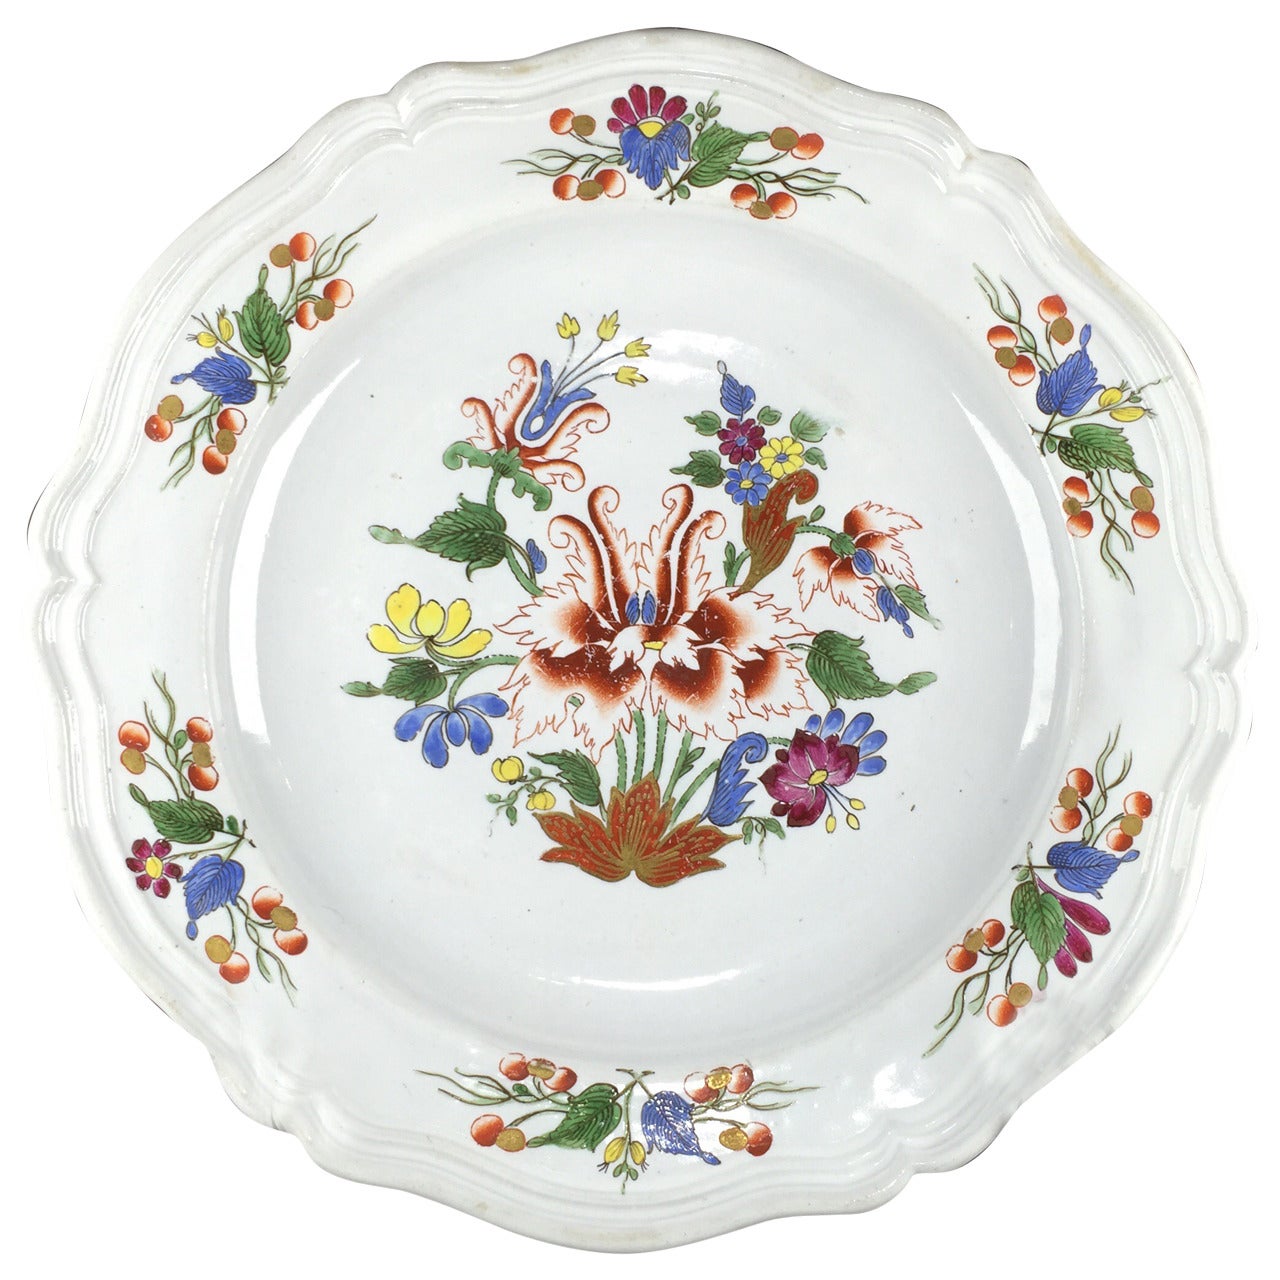 Doccia 'Tulip' Plate in Tin Glaze Porcelain, circa 1790